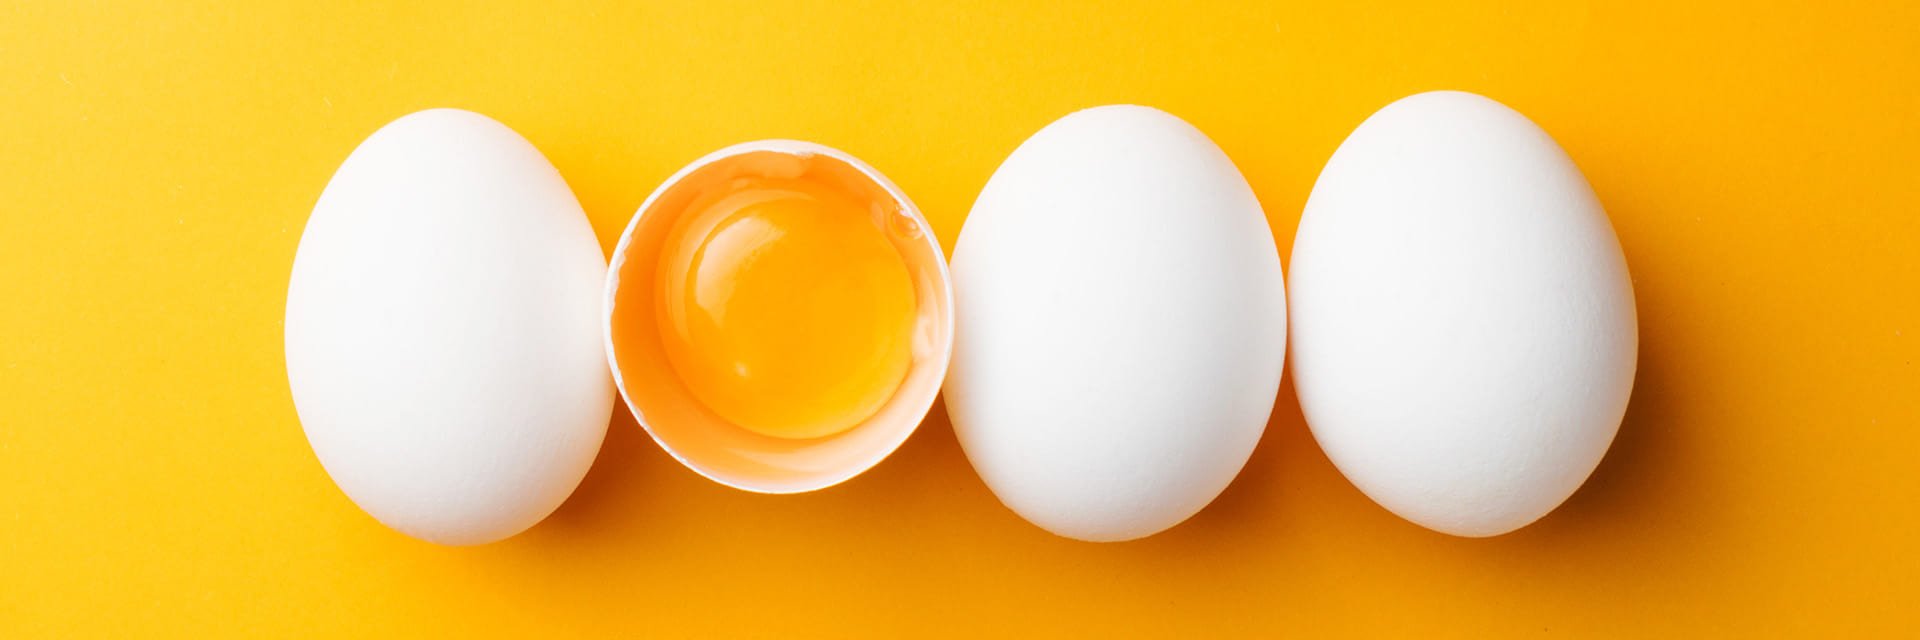 Eggs Selling Platform